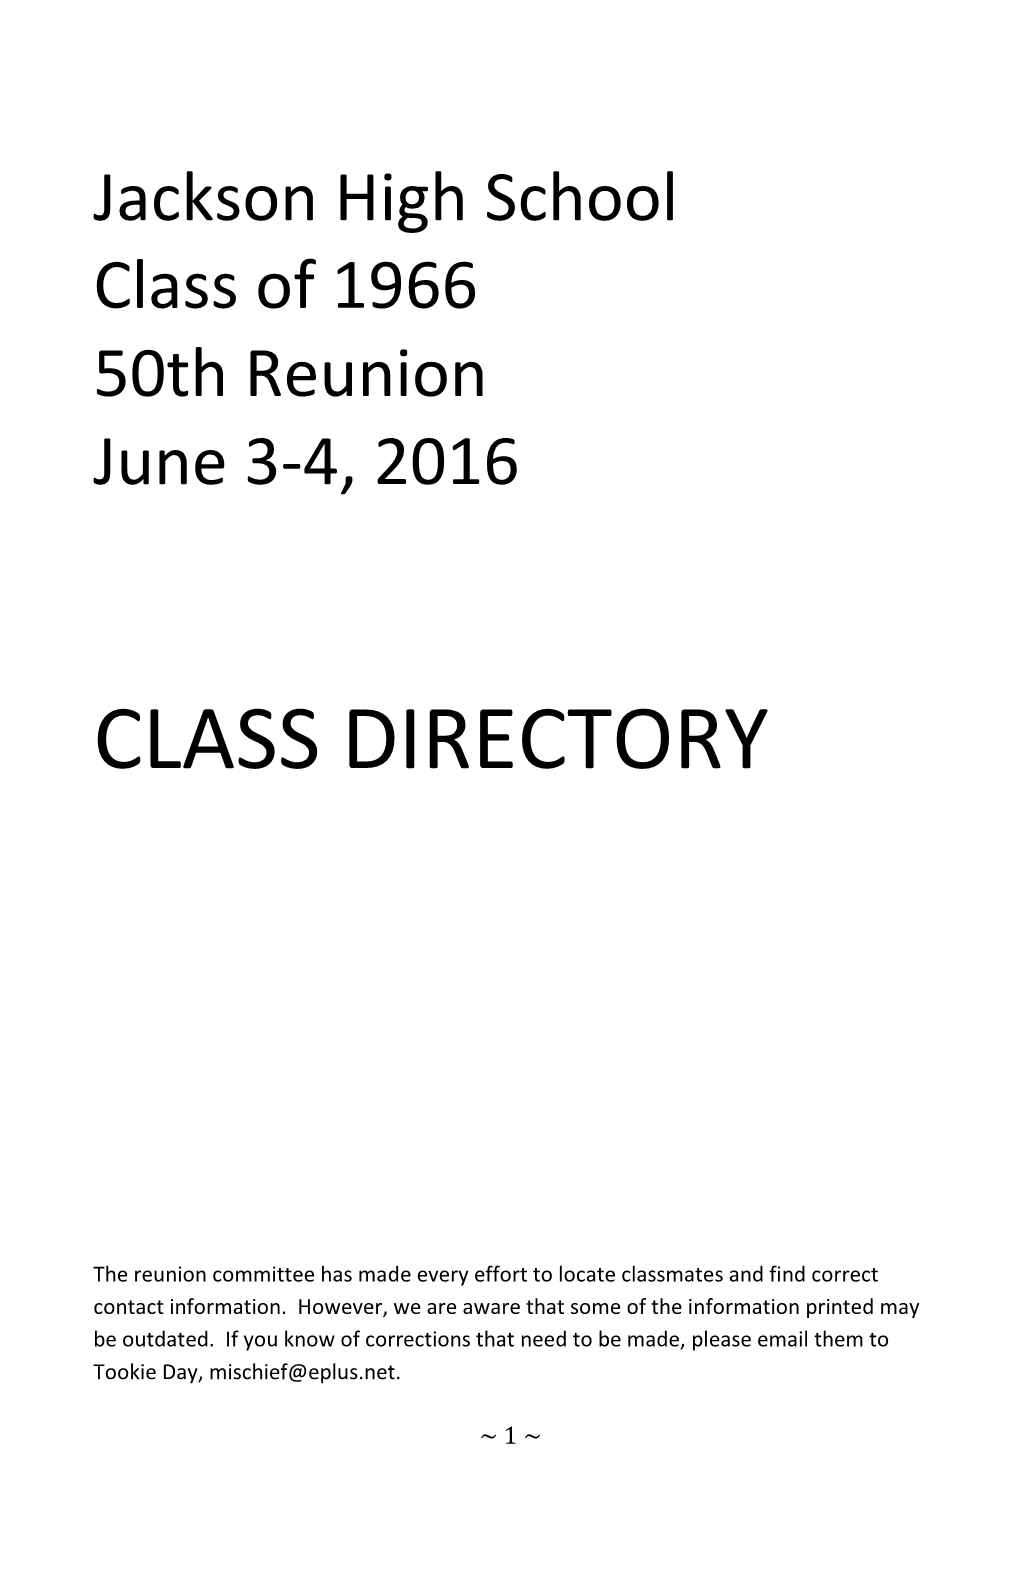 Class Directory